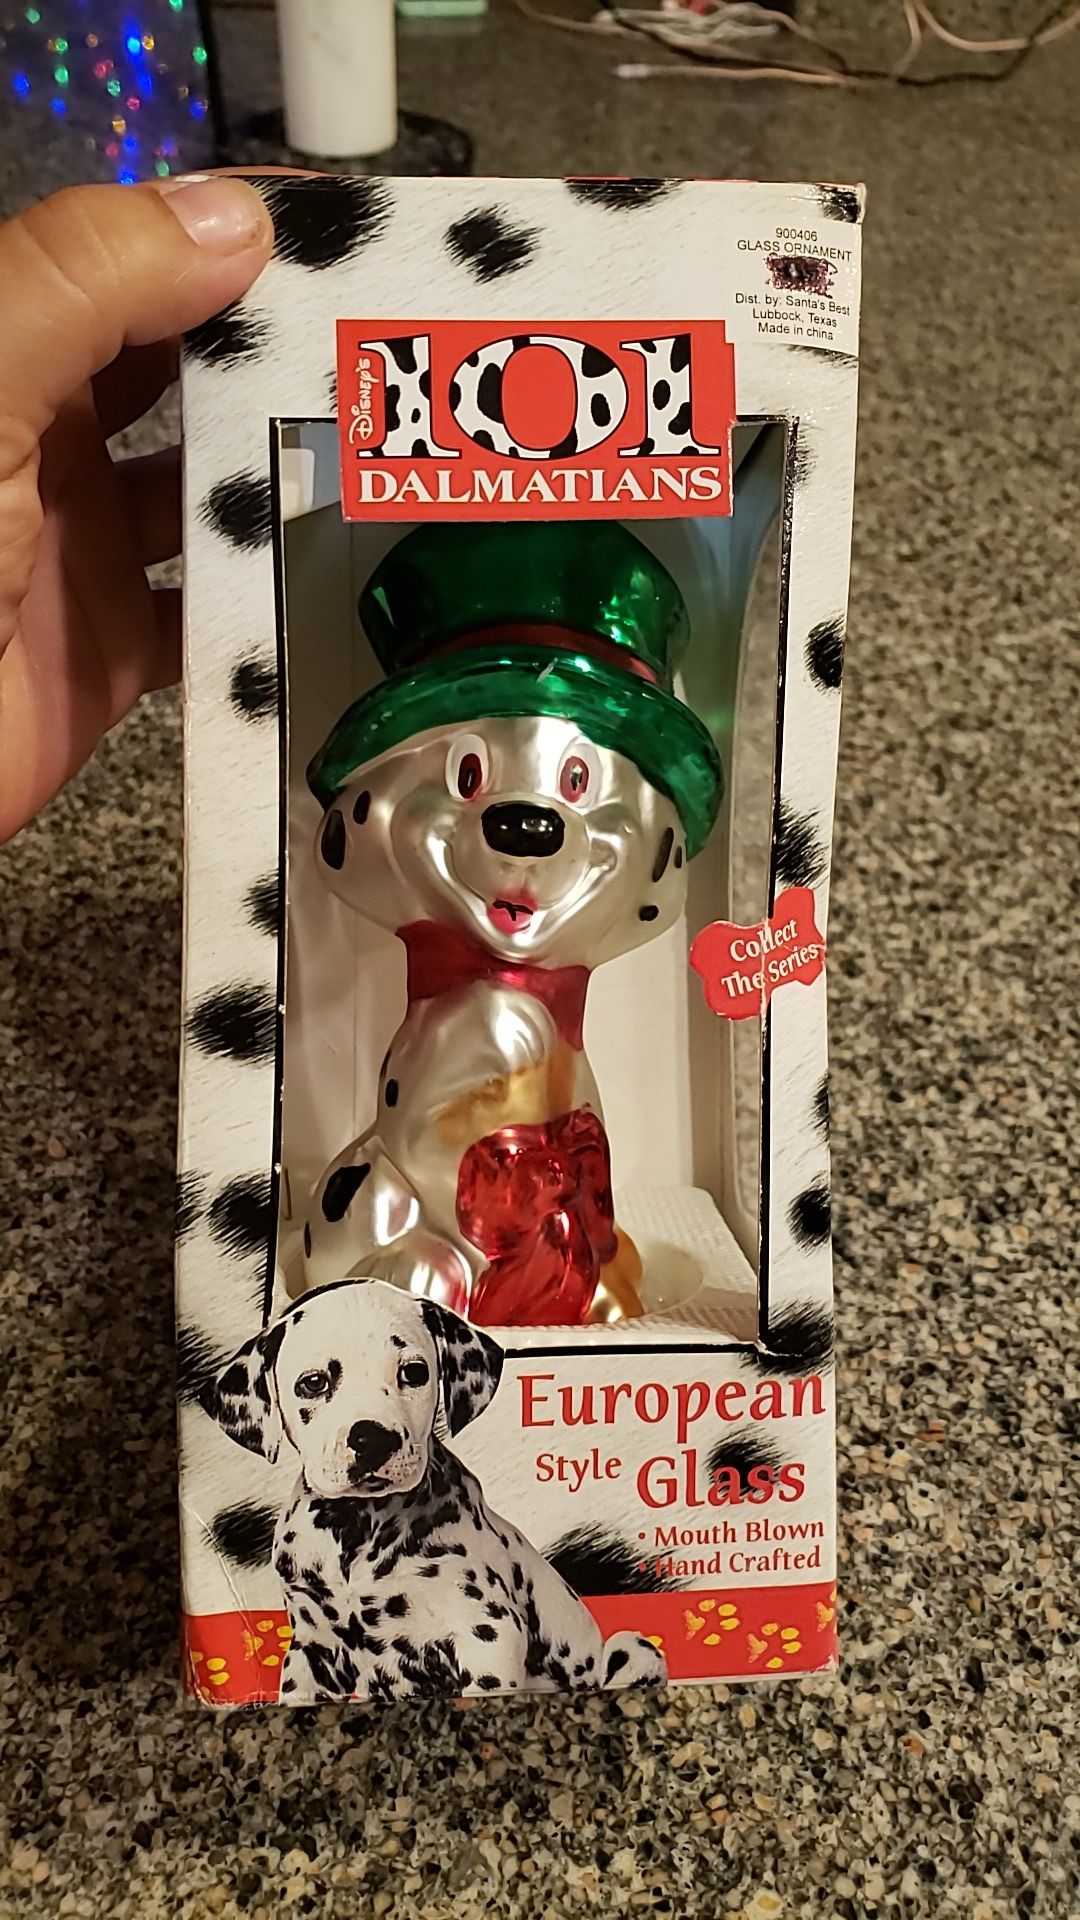 Disney Dalmatian glass ornament